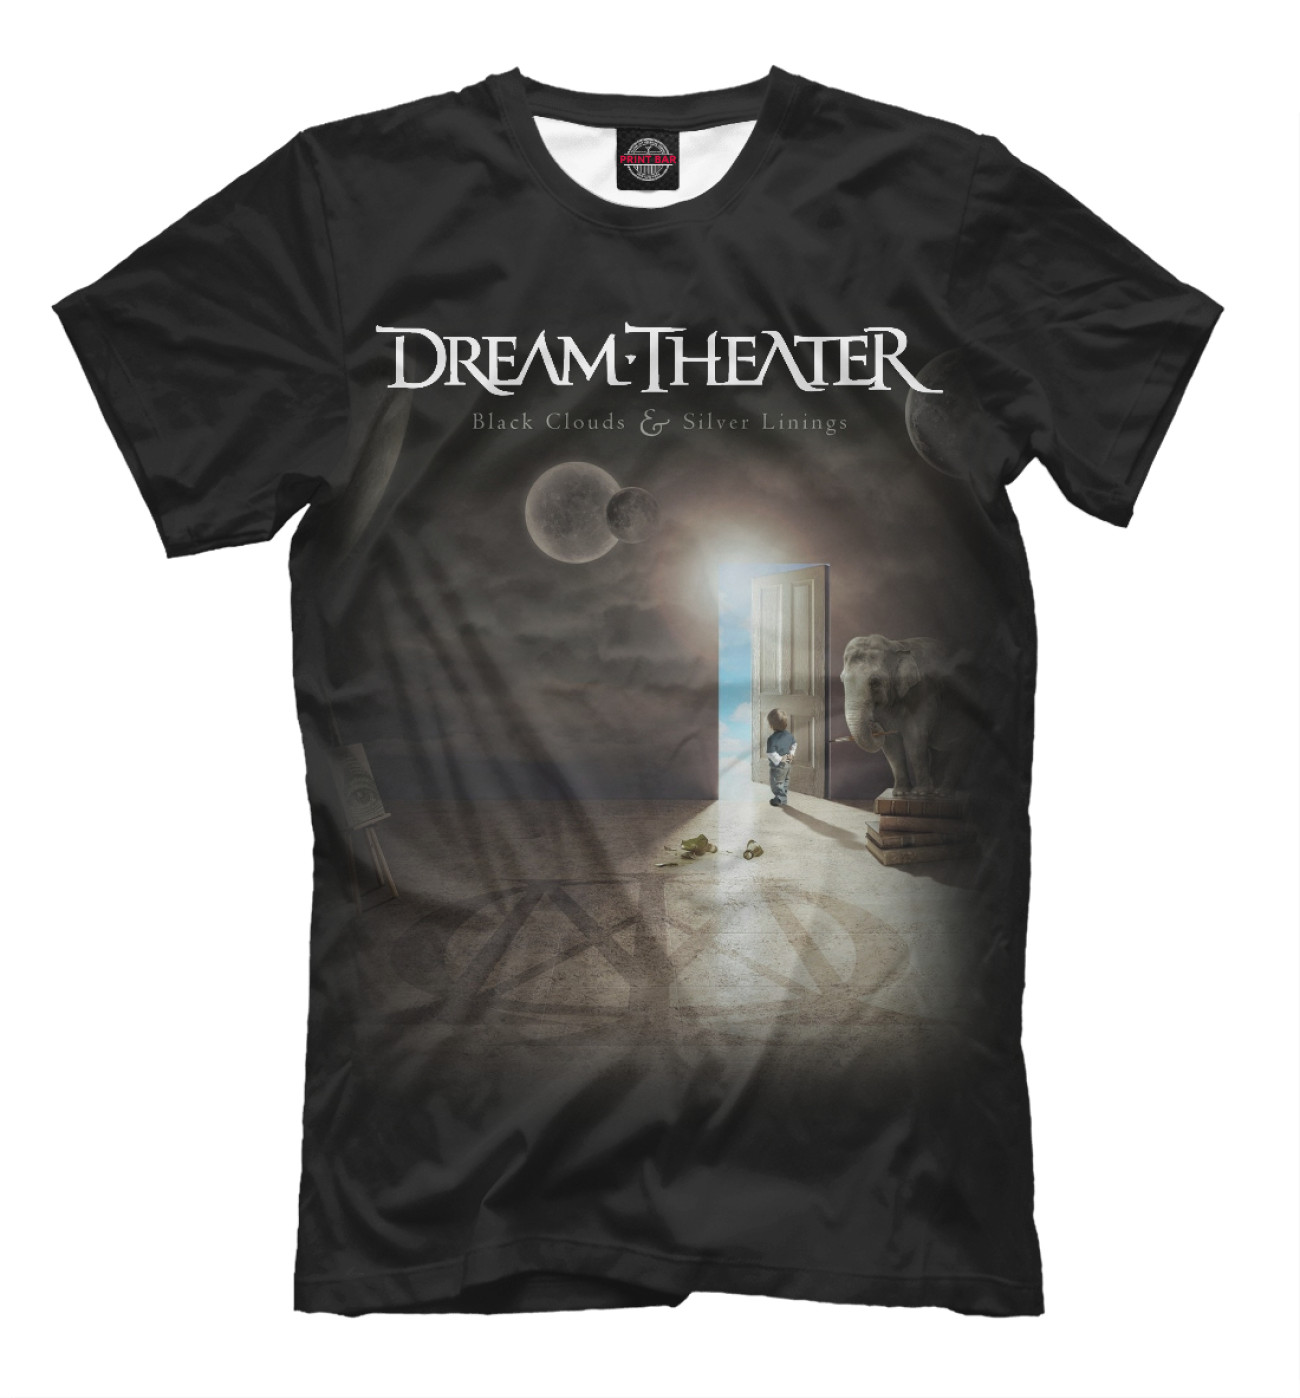 Мужская Футболка Dream Theater, артикул: MZK-672757-fut-2